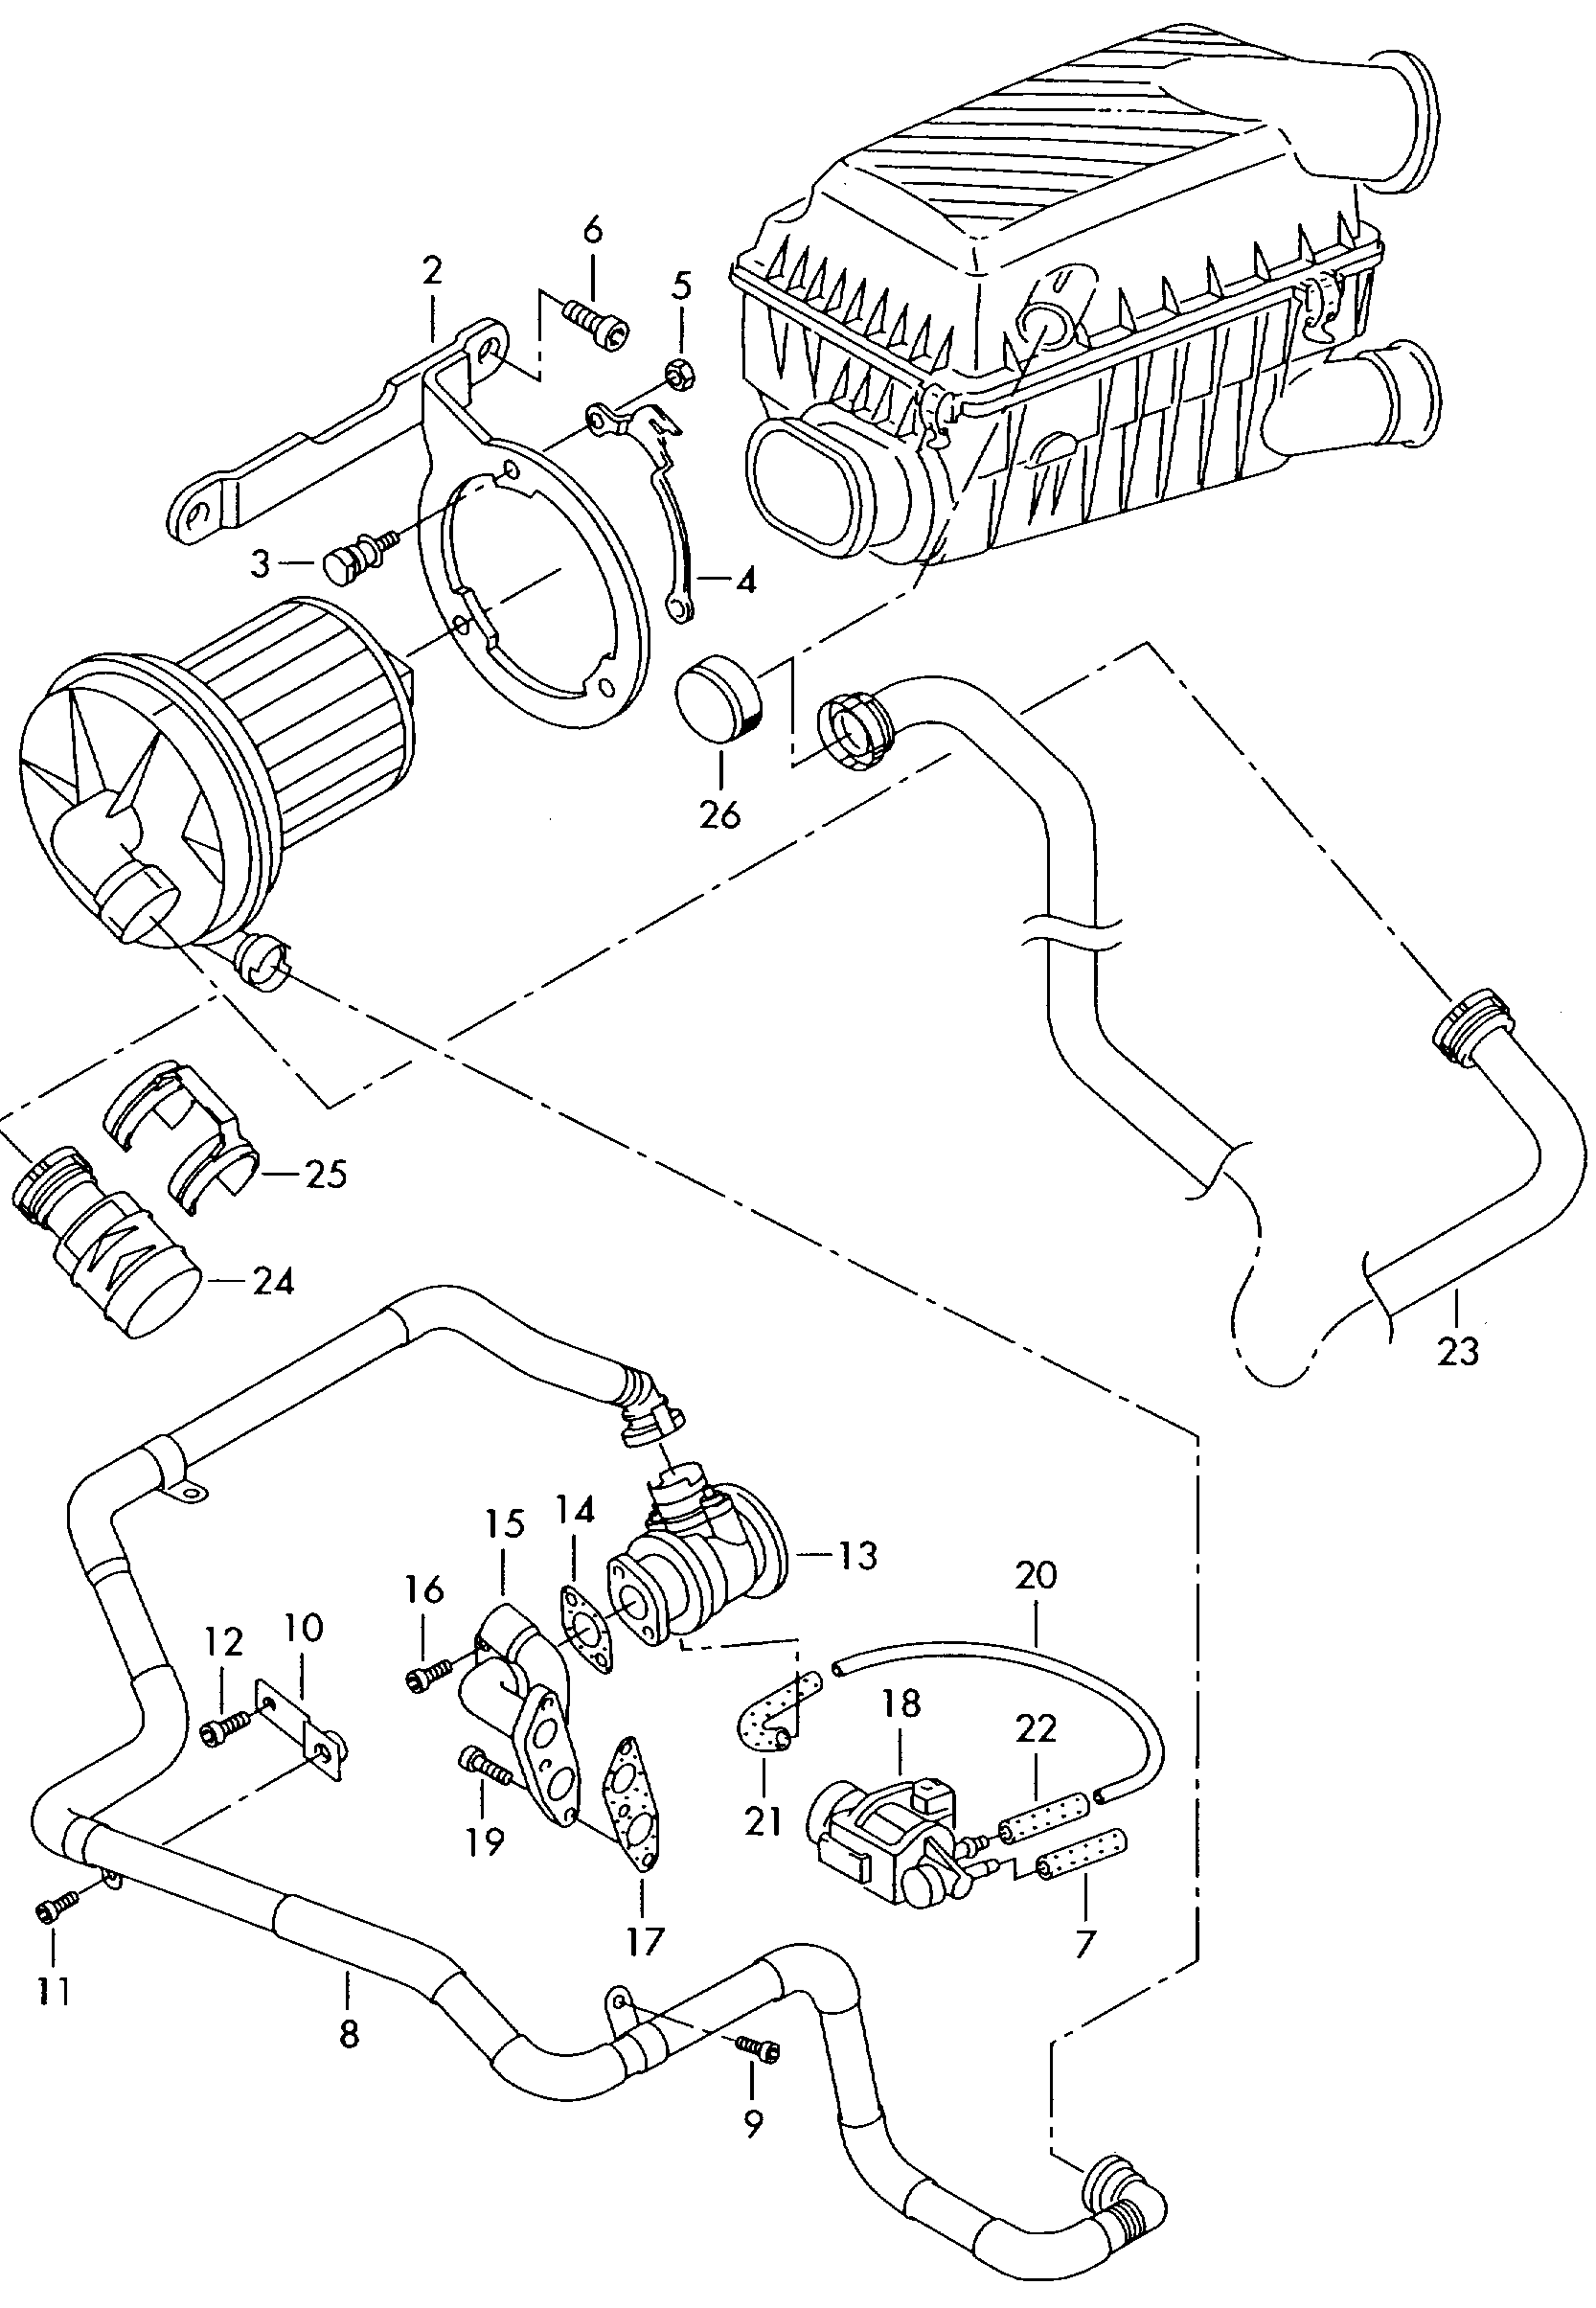 Pompa aria secondaria 2,8l - Transporter - tr